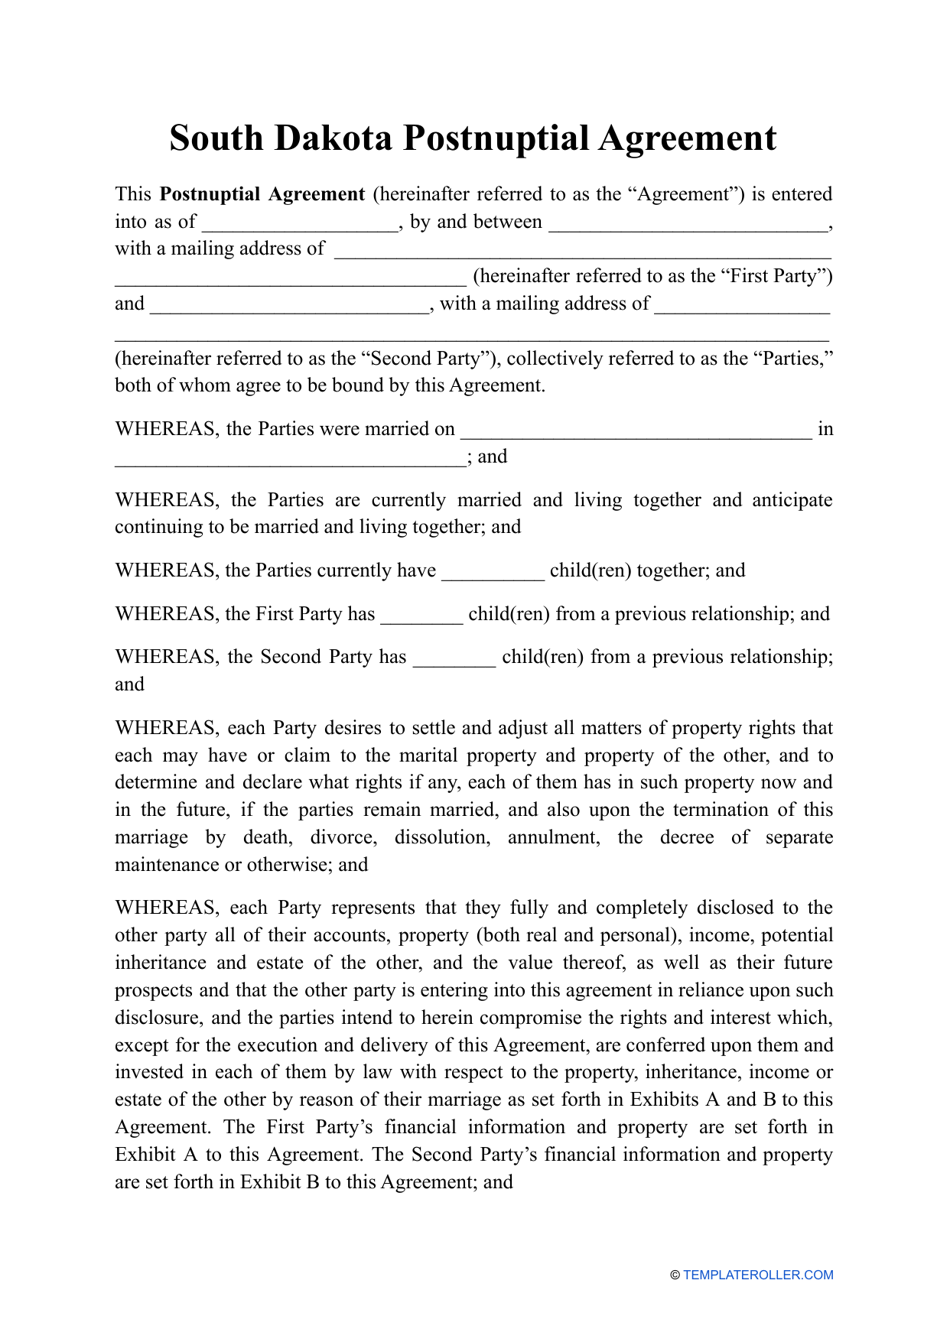 Postnuptial Agreement Template - South Dakota, Page 1